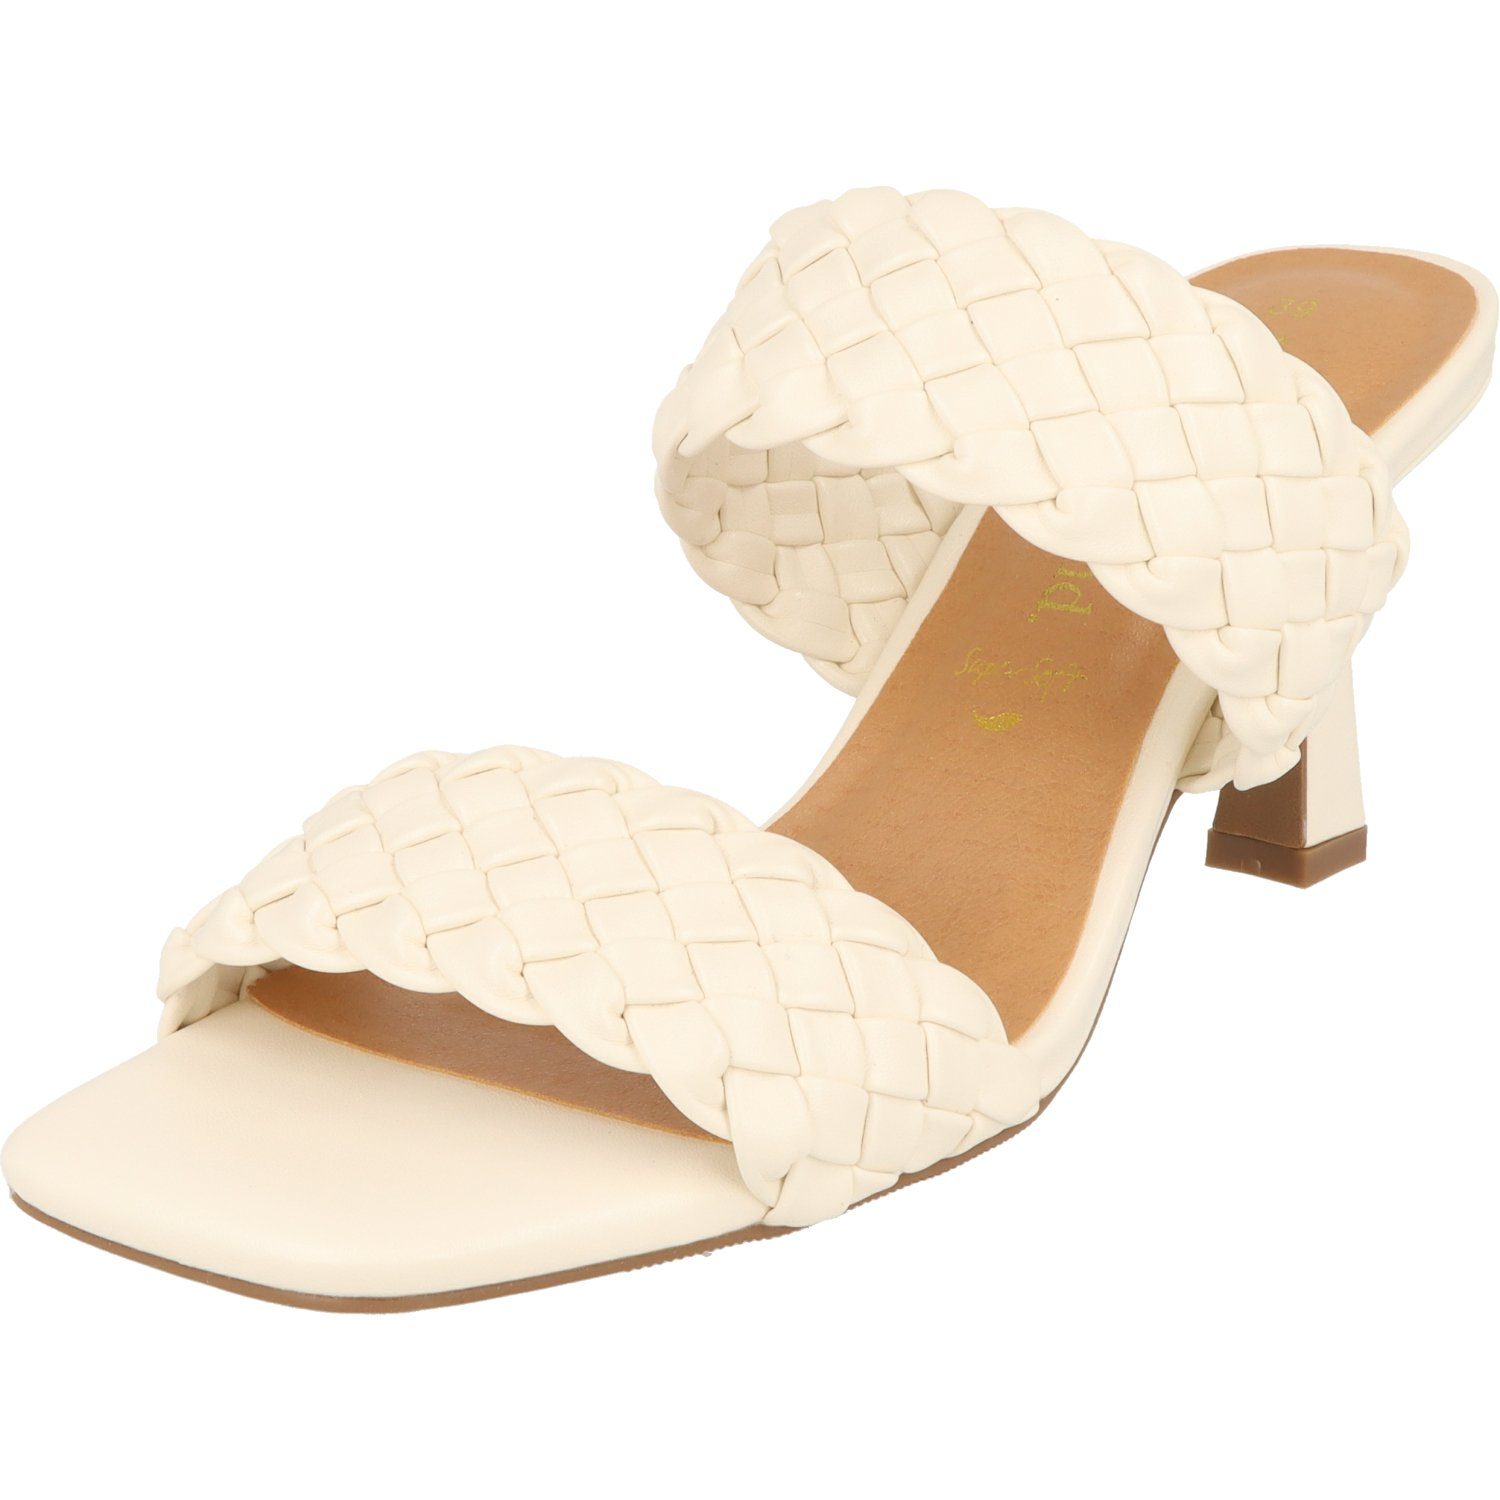 piece of mind. Damen Schuhe elegante Cream 273-161 High-Heel-Sandalette Absatzsandale Slipper